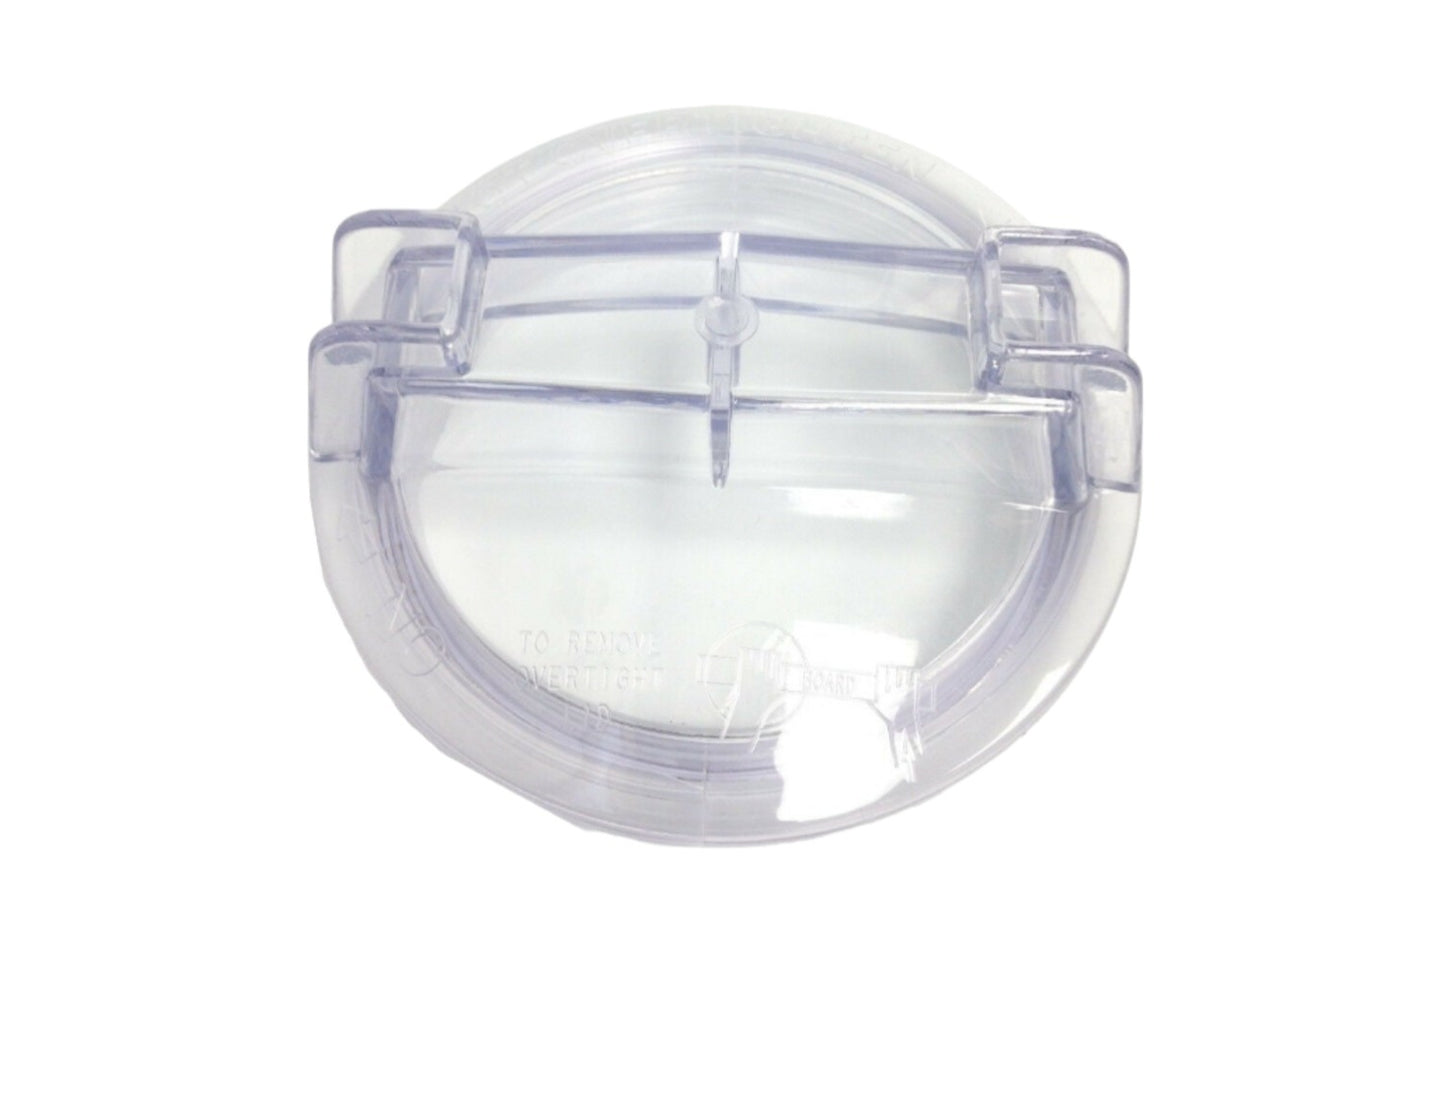 Pump Trap Lid Replacement For Max-E-Glas Dura-Glas Pentair Sta-Rite C3-139P1